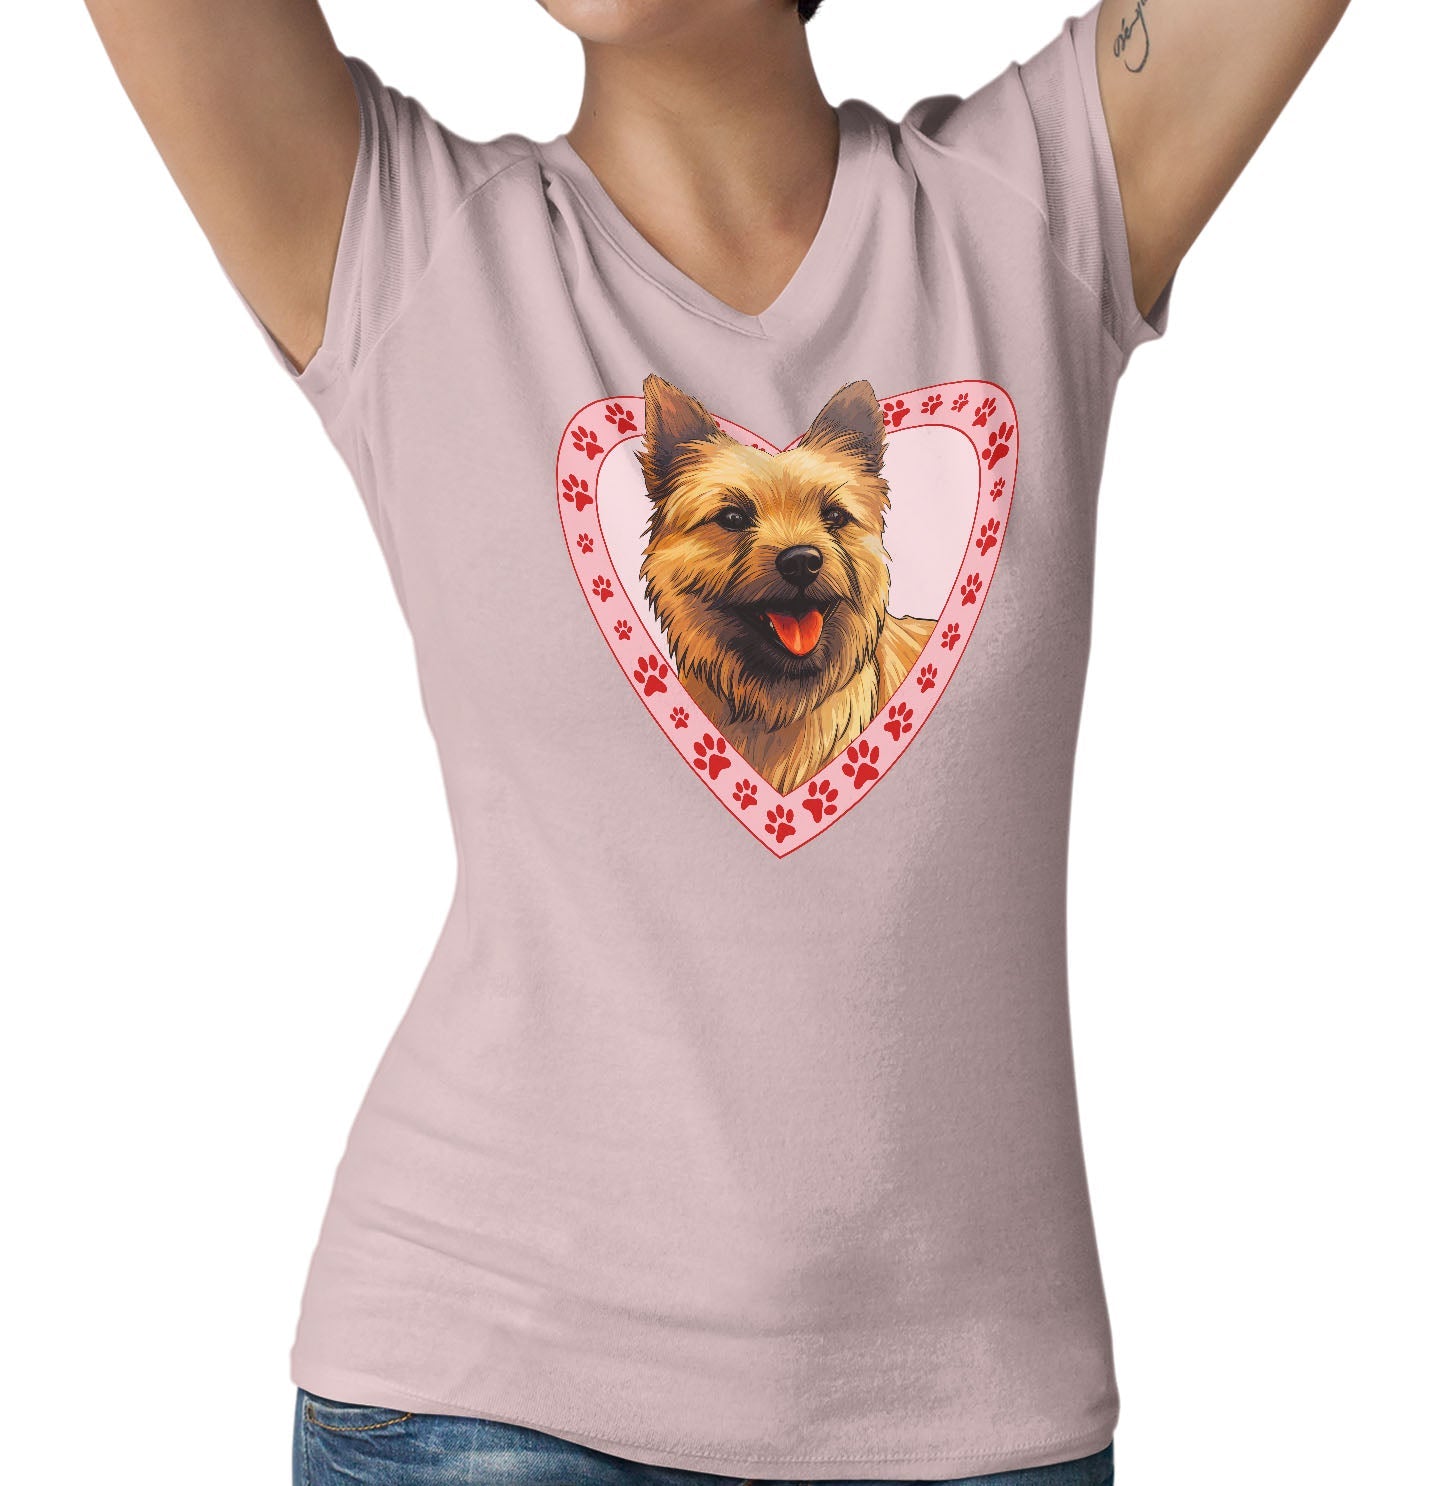 Norwich Terrier Illustration In Heart - Women's V-Neck T-Shirt